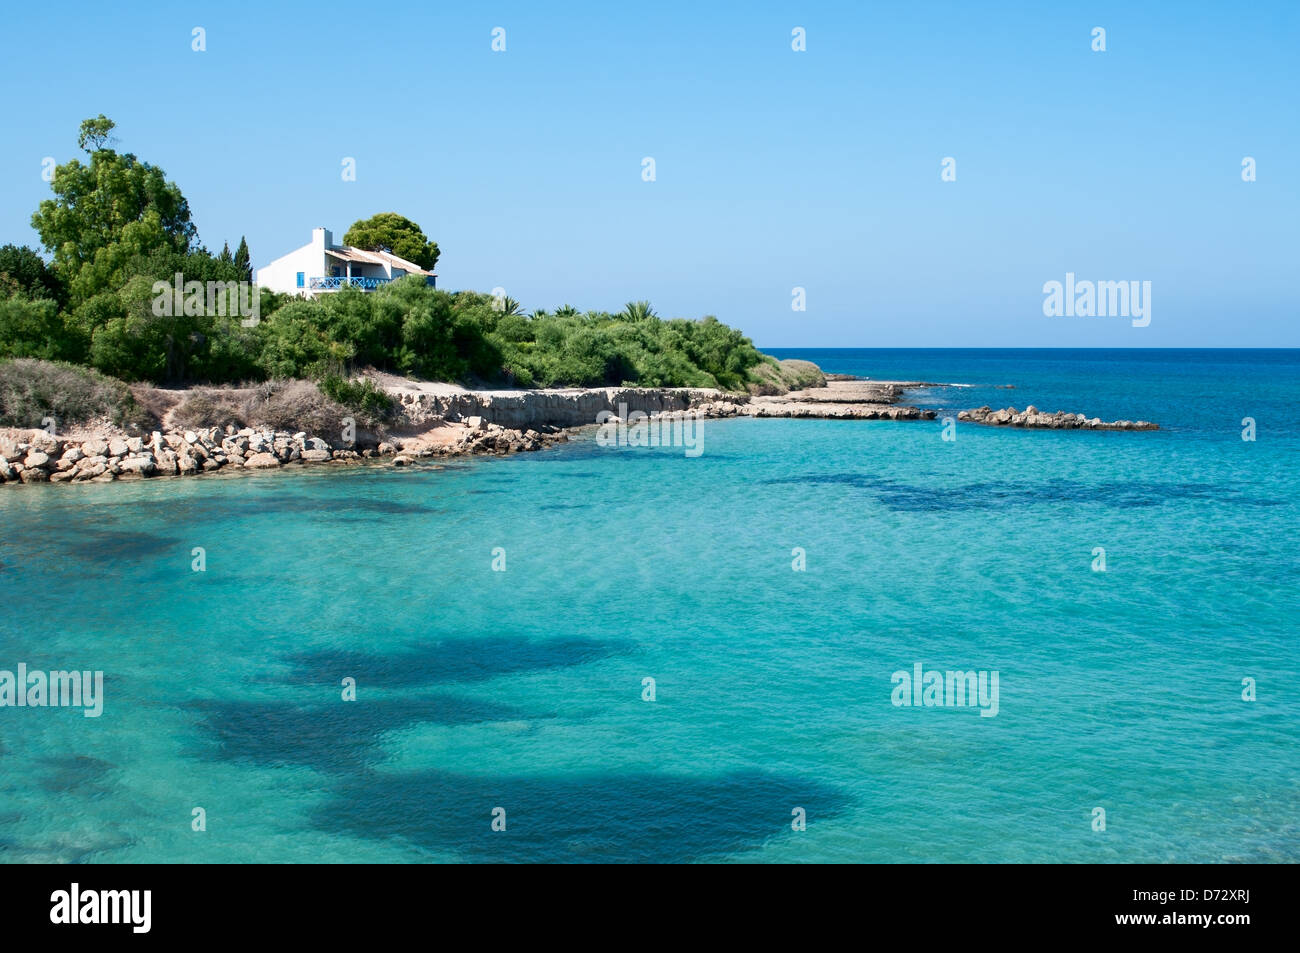 Small house on seashore of Cyprus Island near Mediterranean sea Stock Photo